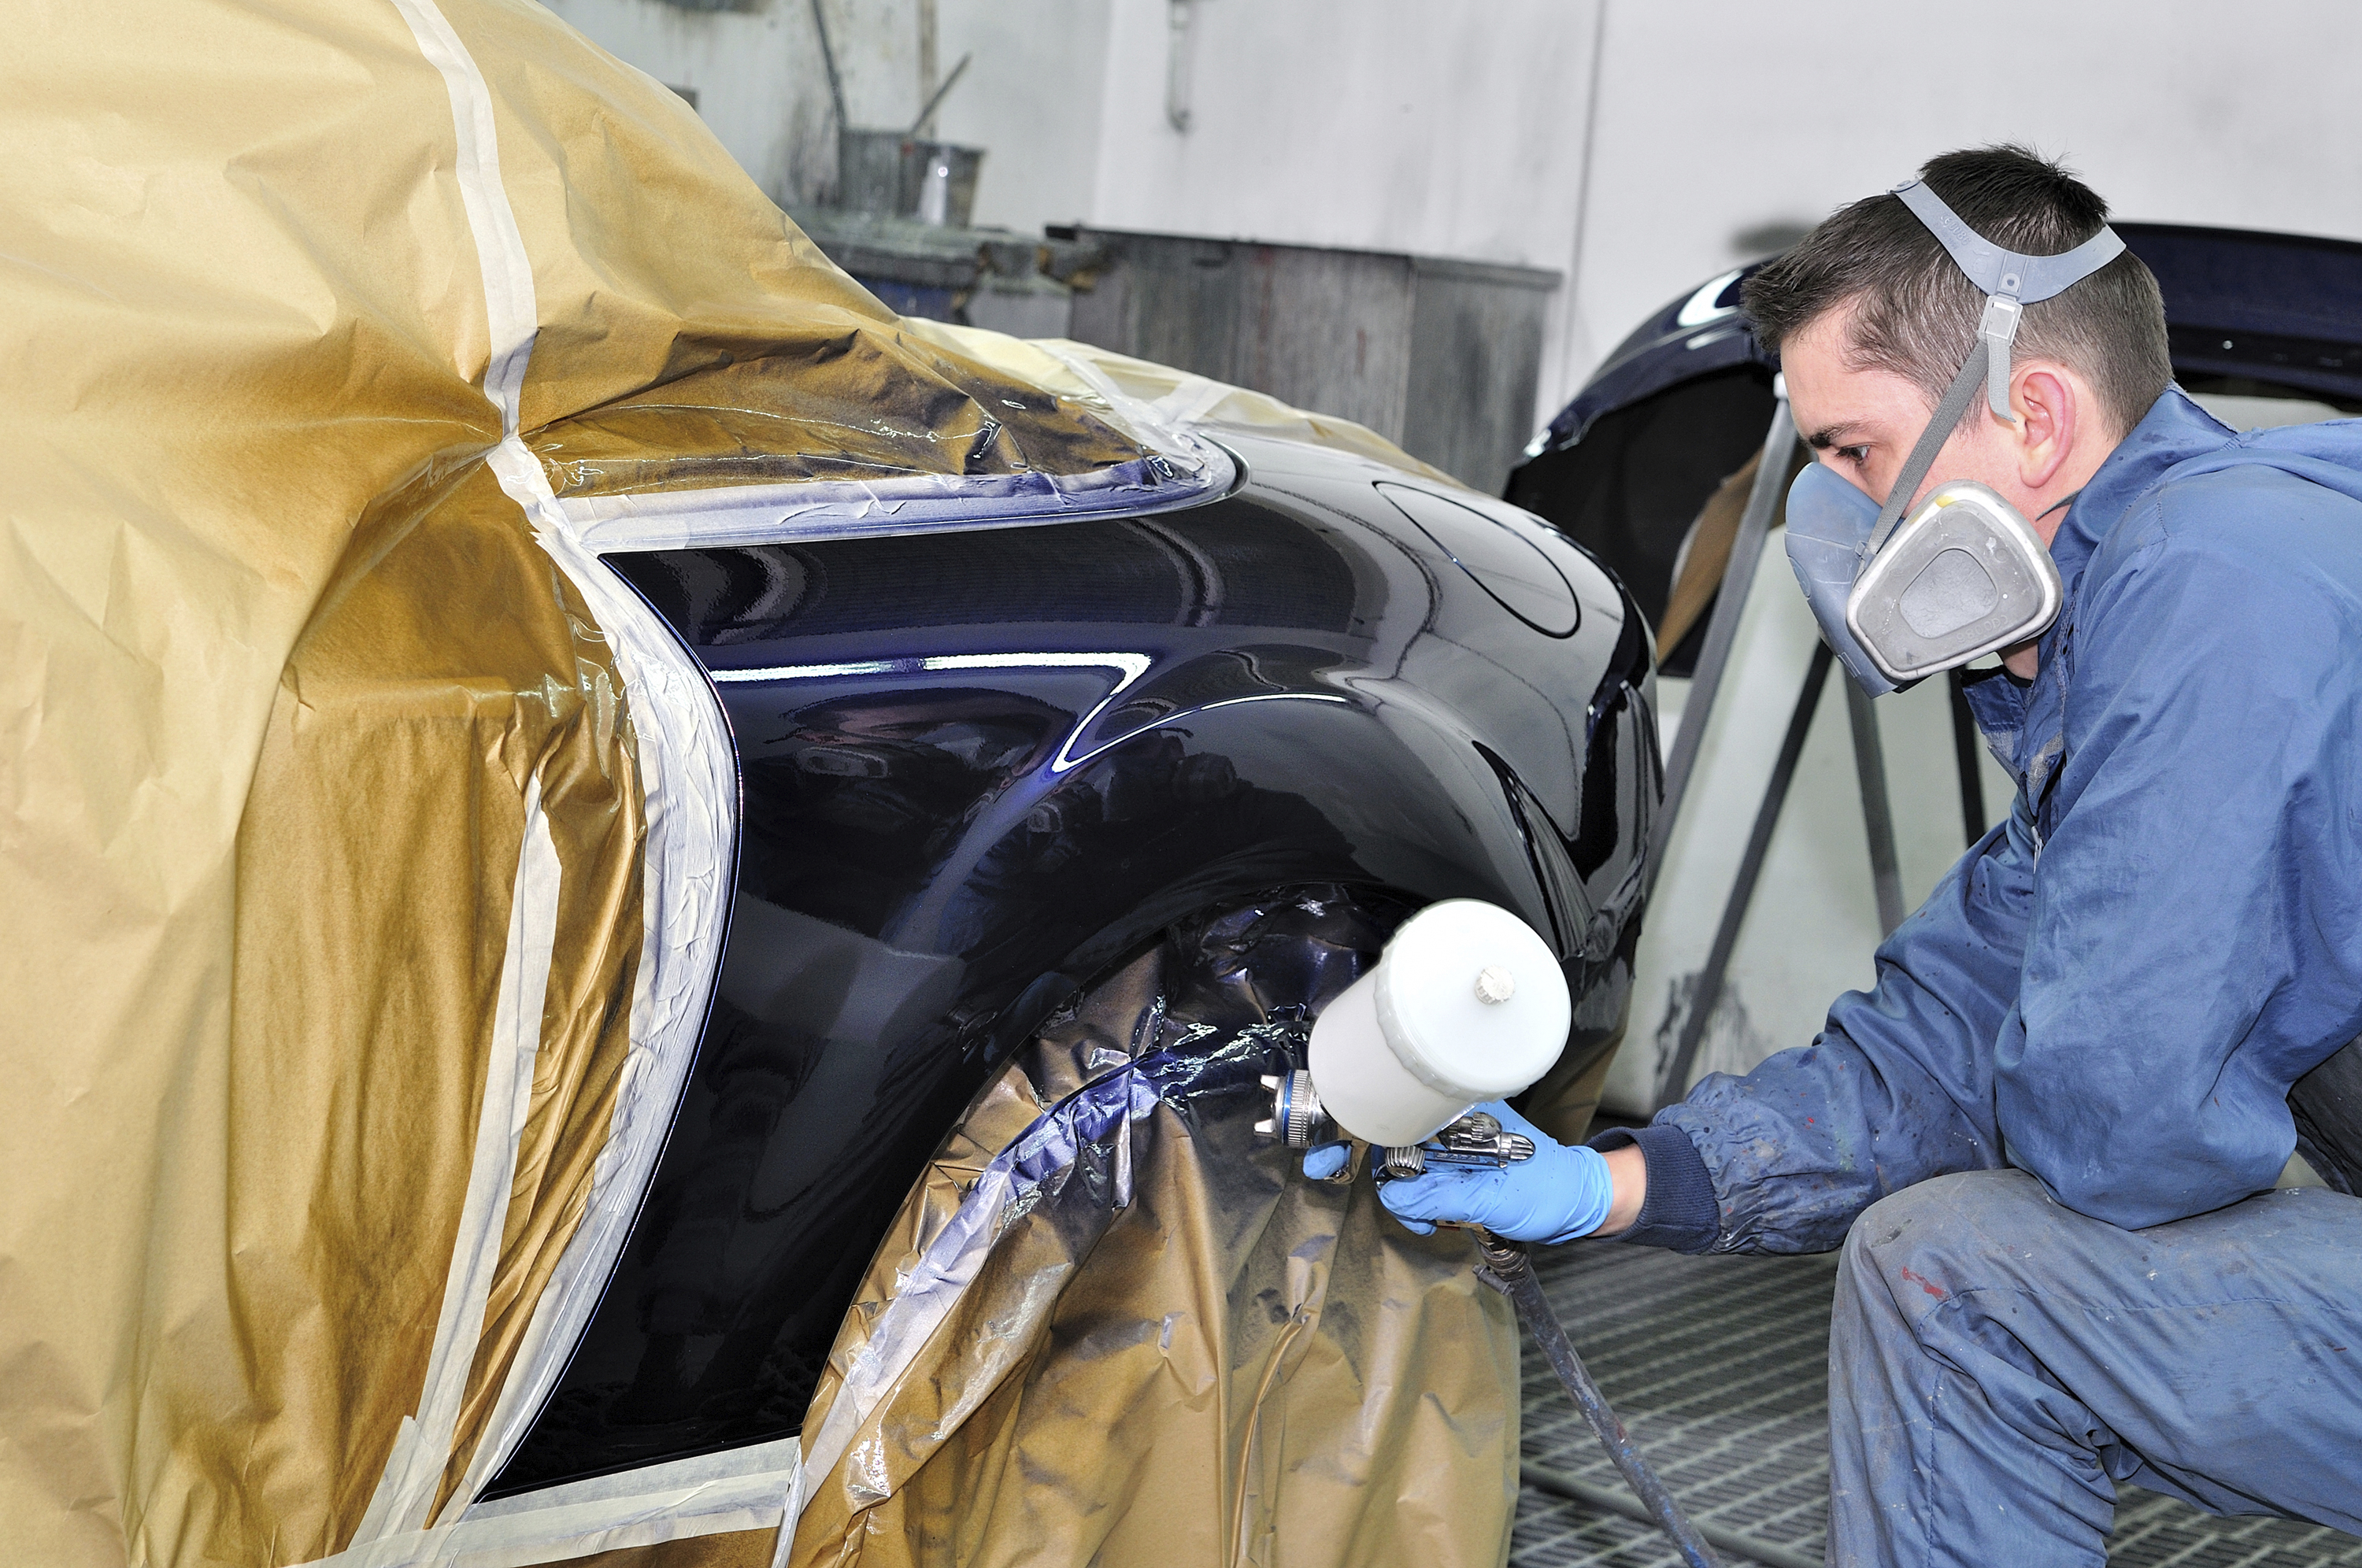 Car paint sprayer jobs in kent